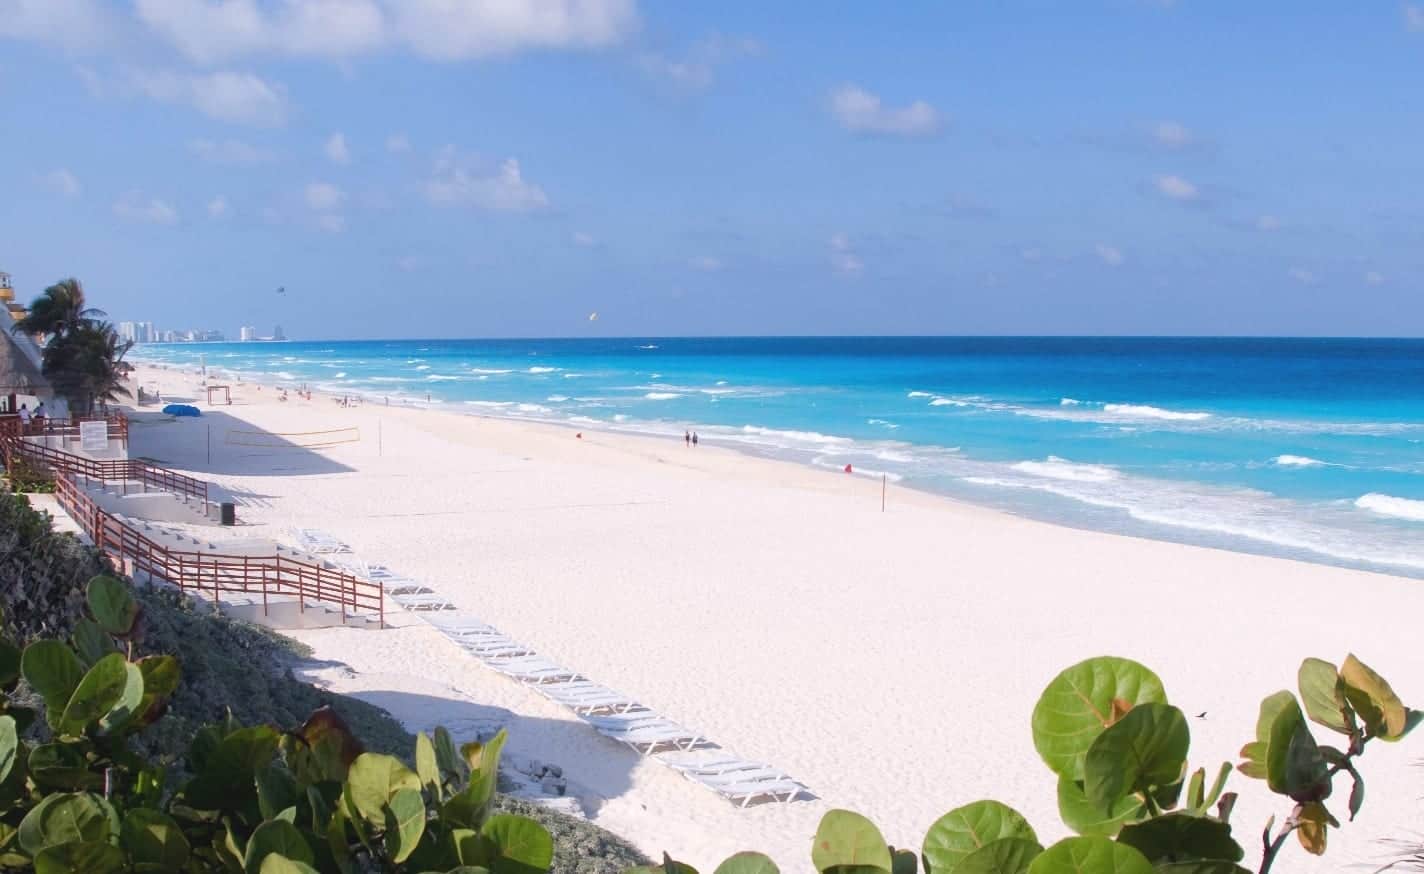 Grand Oasis Resort Cancun beach holiday